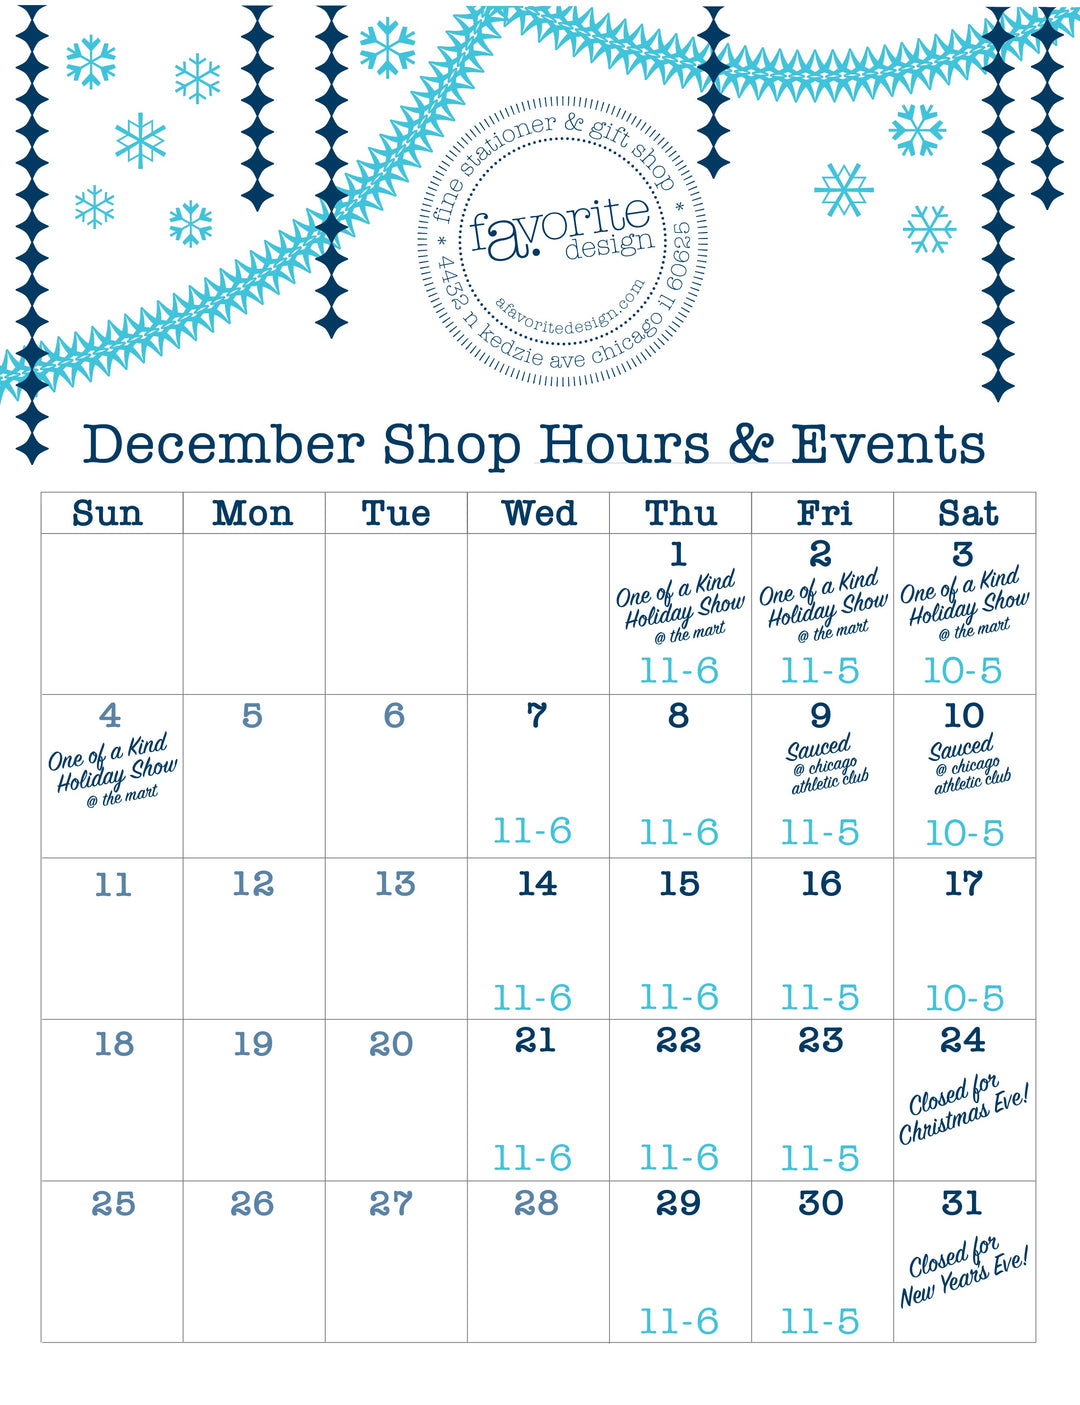 December events!